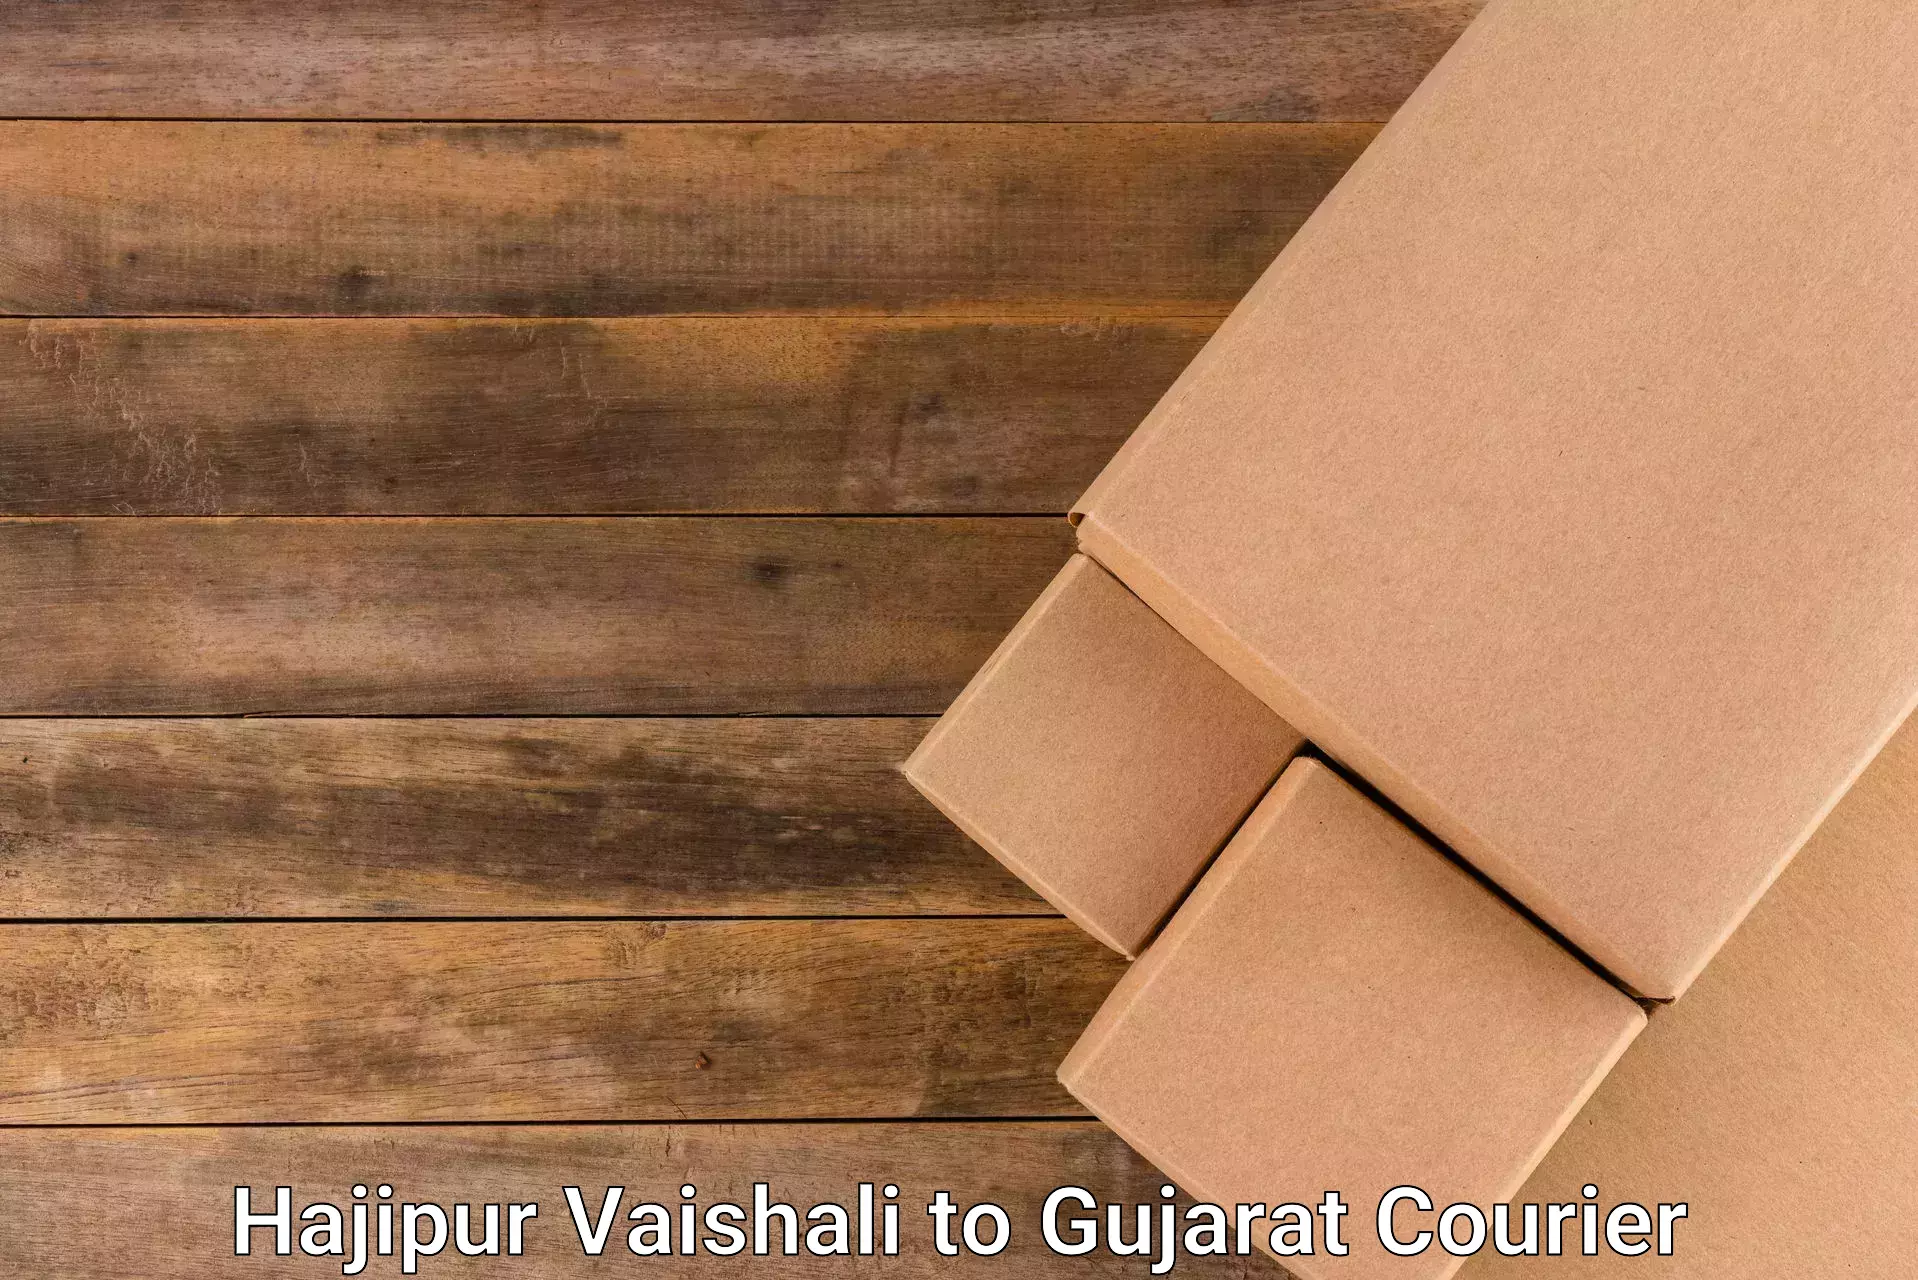 Reliable courier service Hajipur Vaishali to Jamjodhpur